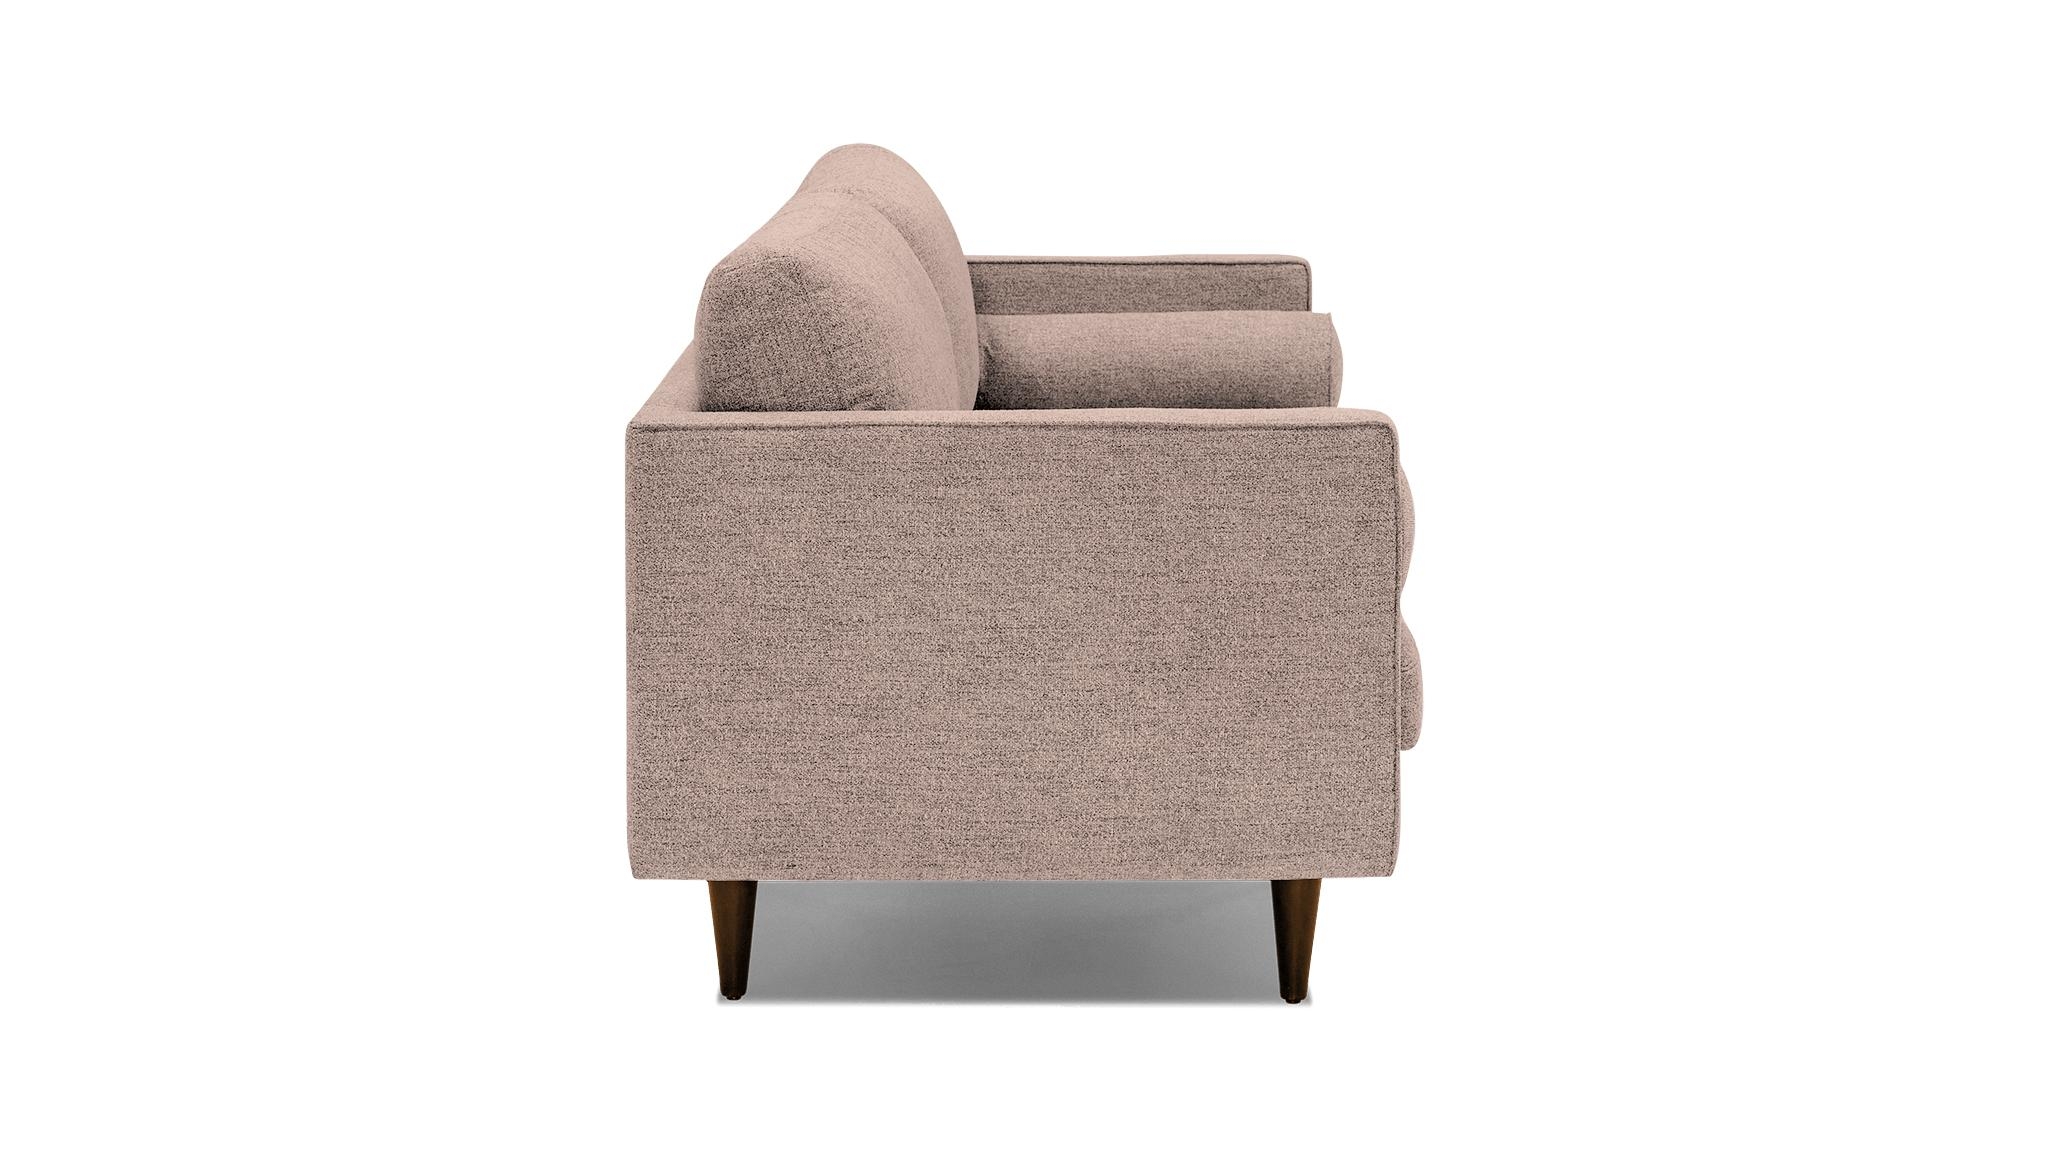 Pink Briar Mid Century Modern Sofa - Prime Blush - Mocha - Image 2